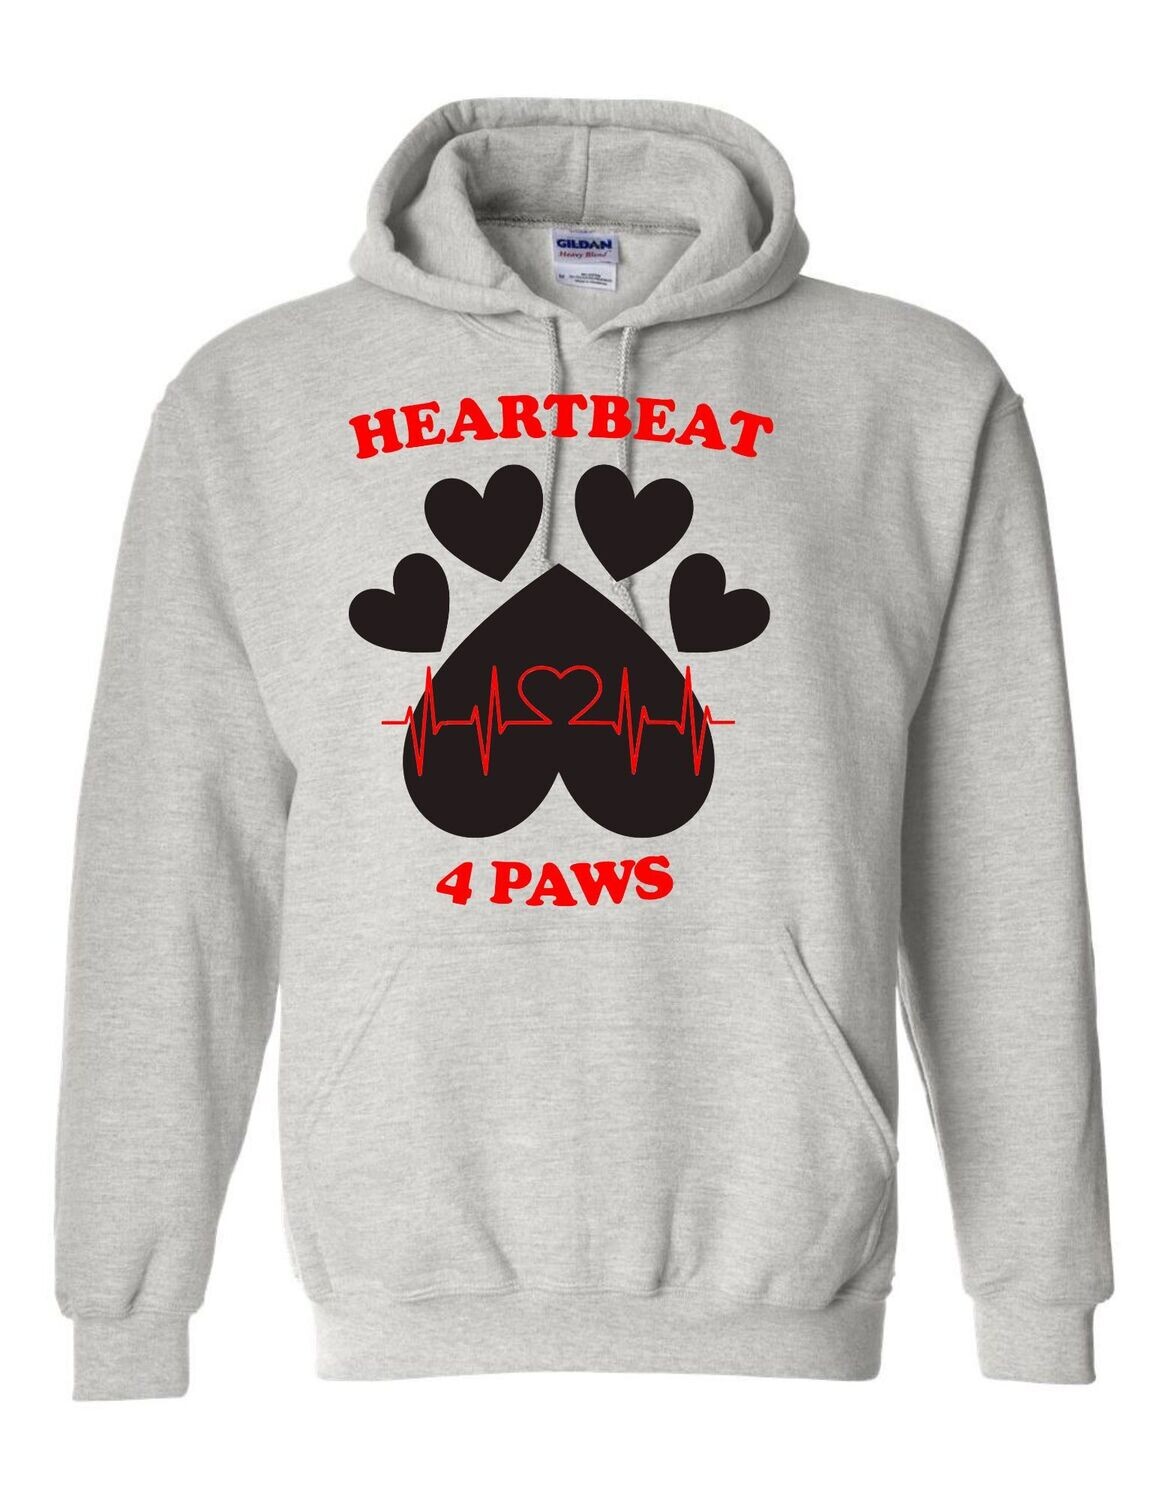 Heartbeat 4 Paws Ash Gray Hooded Sweatshirt